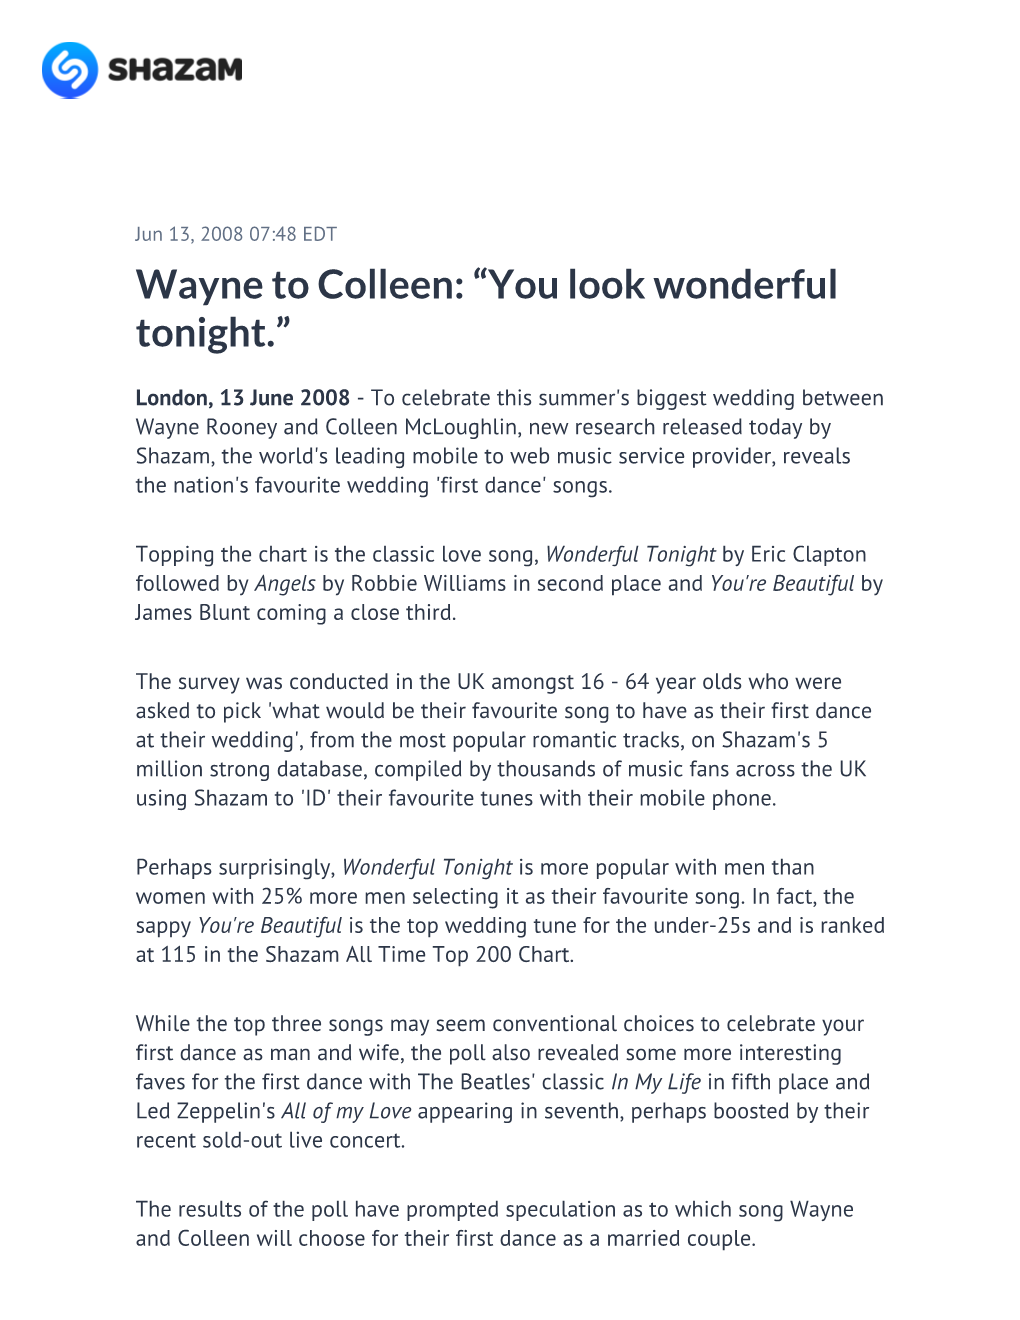 Wayne to Colleen: “You Look Wonderful Tonight.”